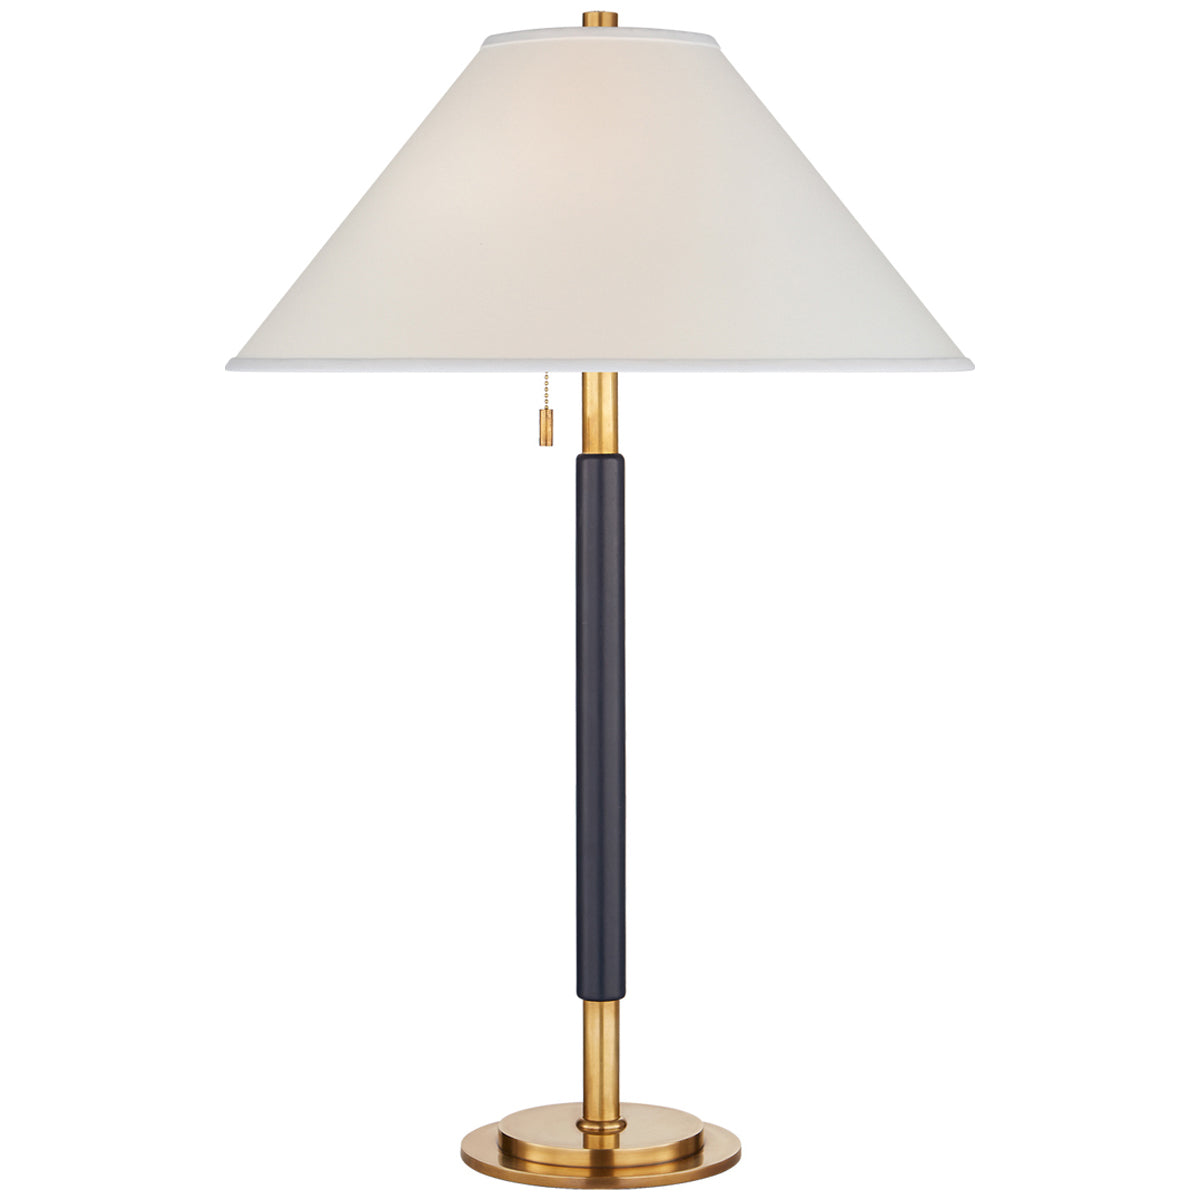 RL3031NBECNB by Visual Comfort - Barton Desk Lamp in Natural Brass